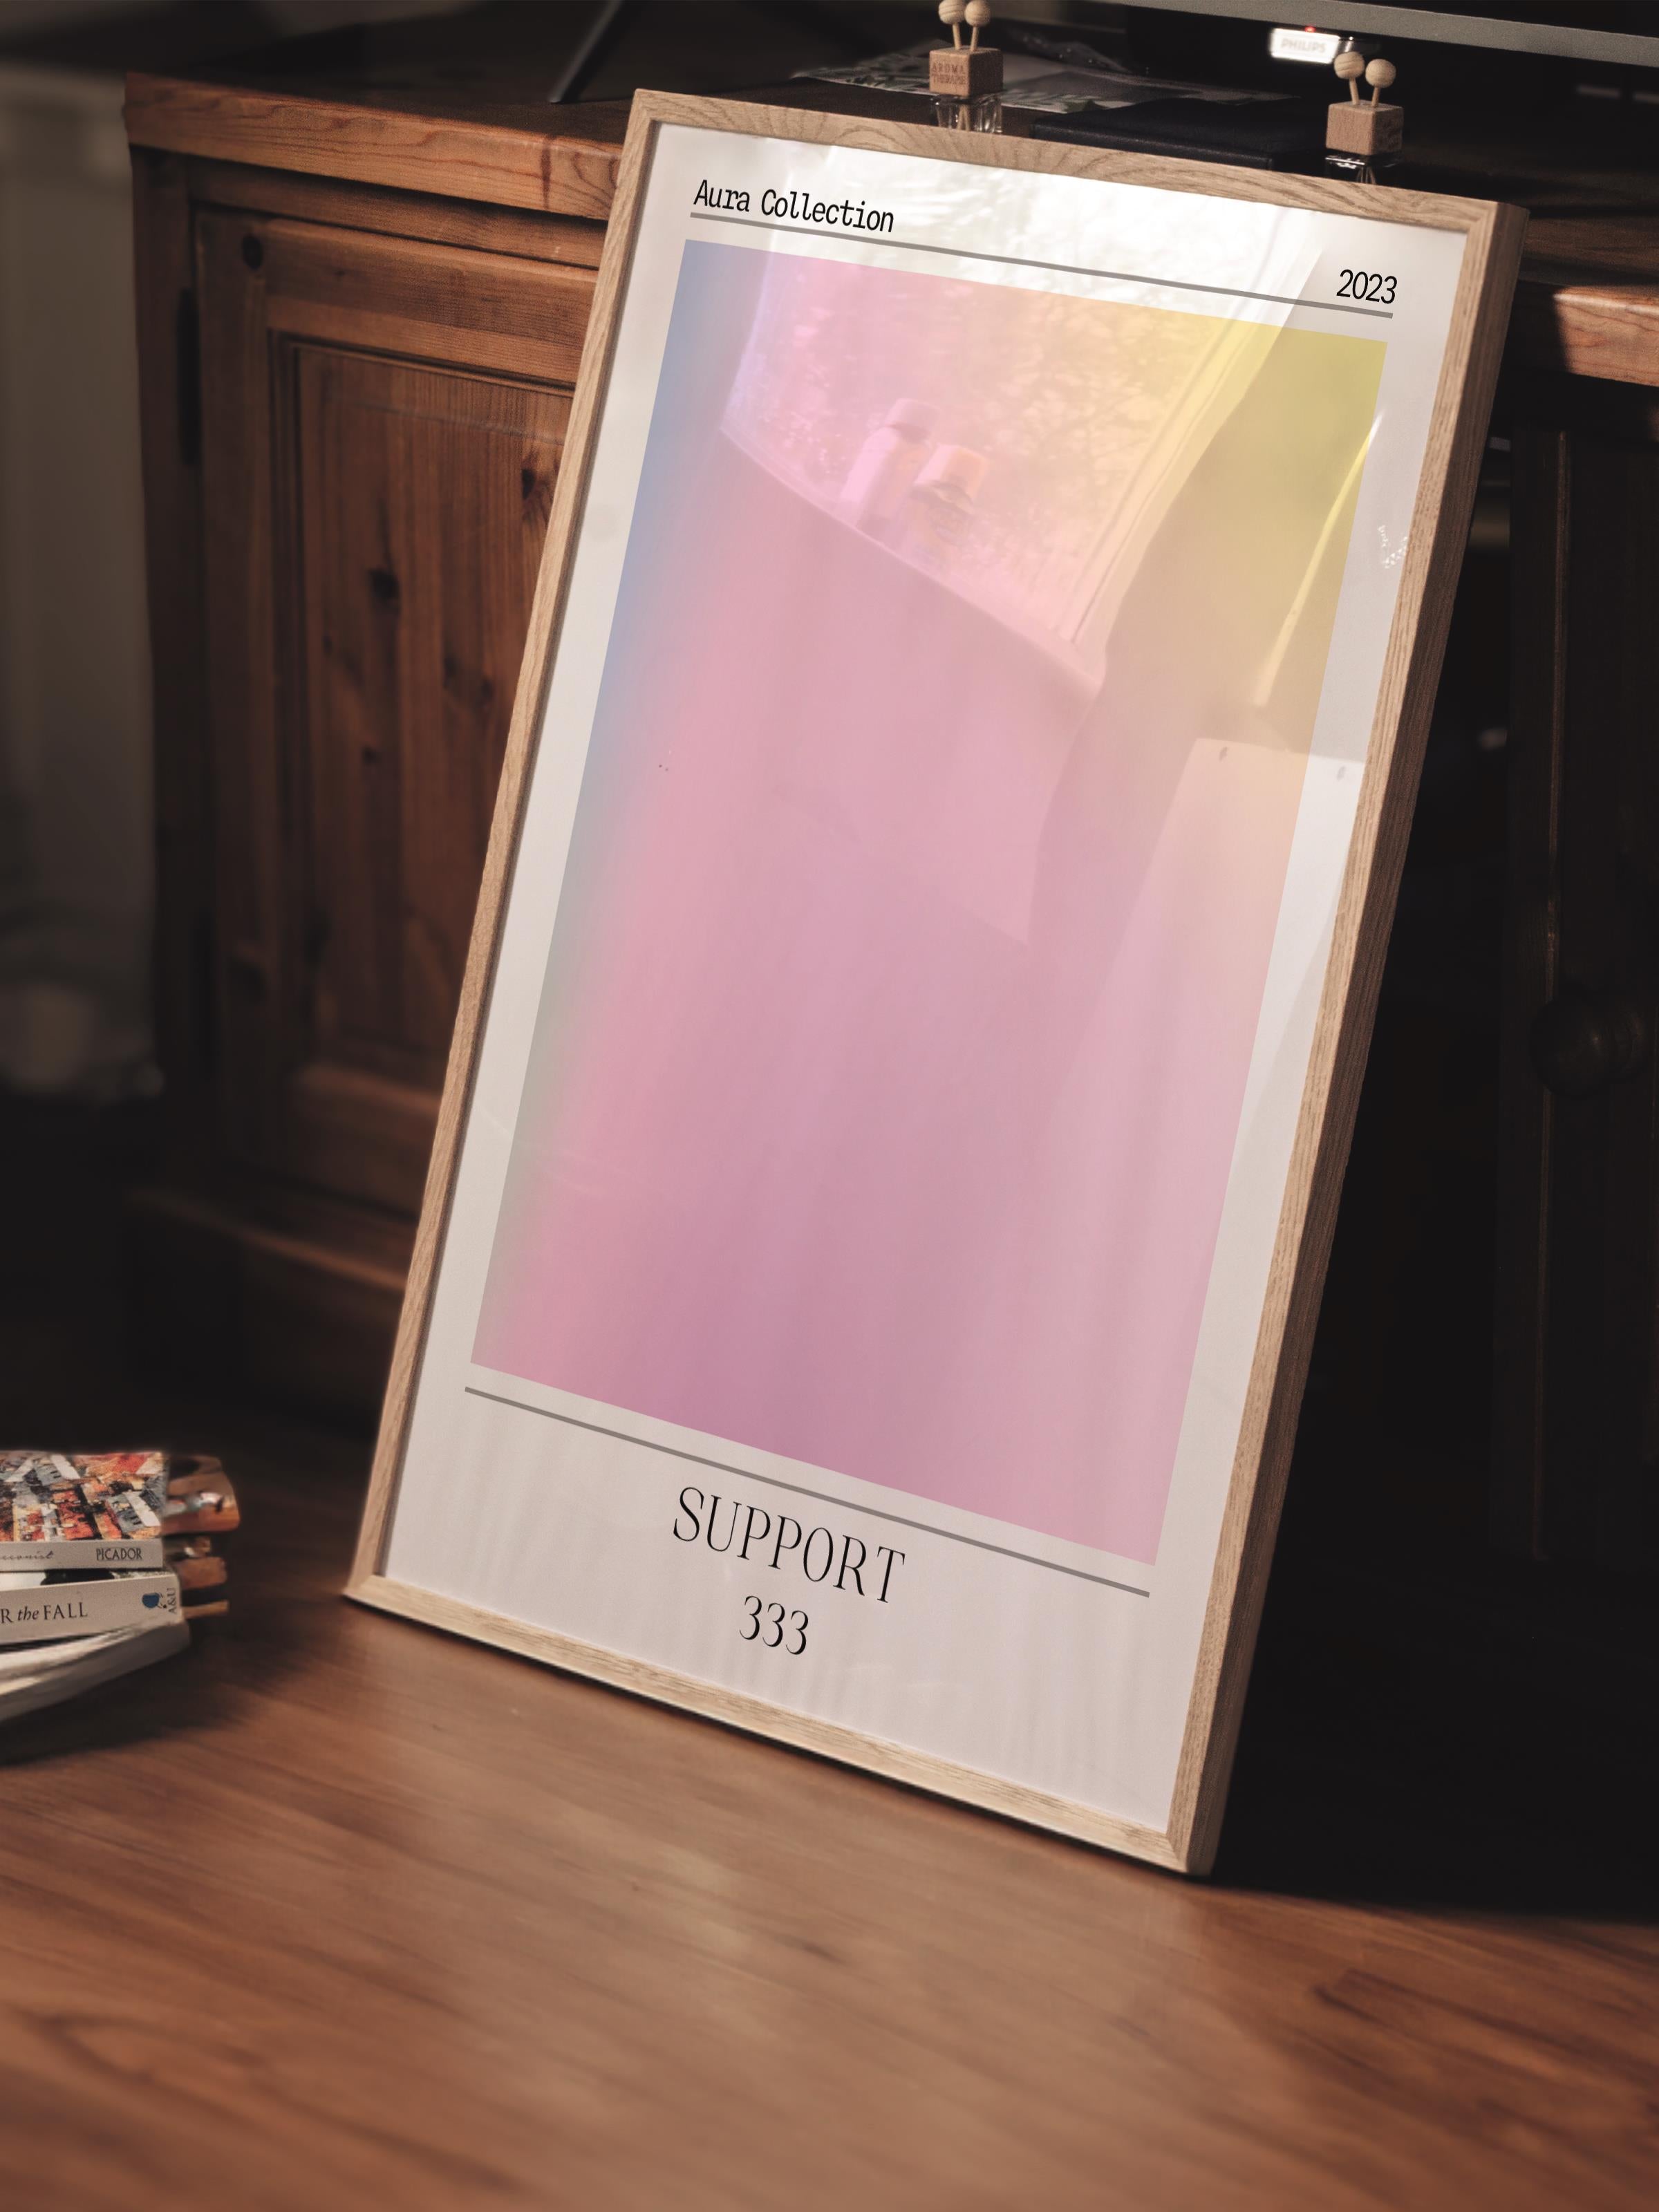 Çerçevesiz Poster, Aura Serisi NO:124 - 333 - Support Renkli, Melek Numaraları, Renkli Poster